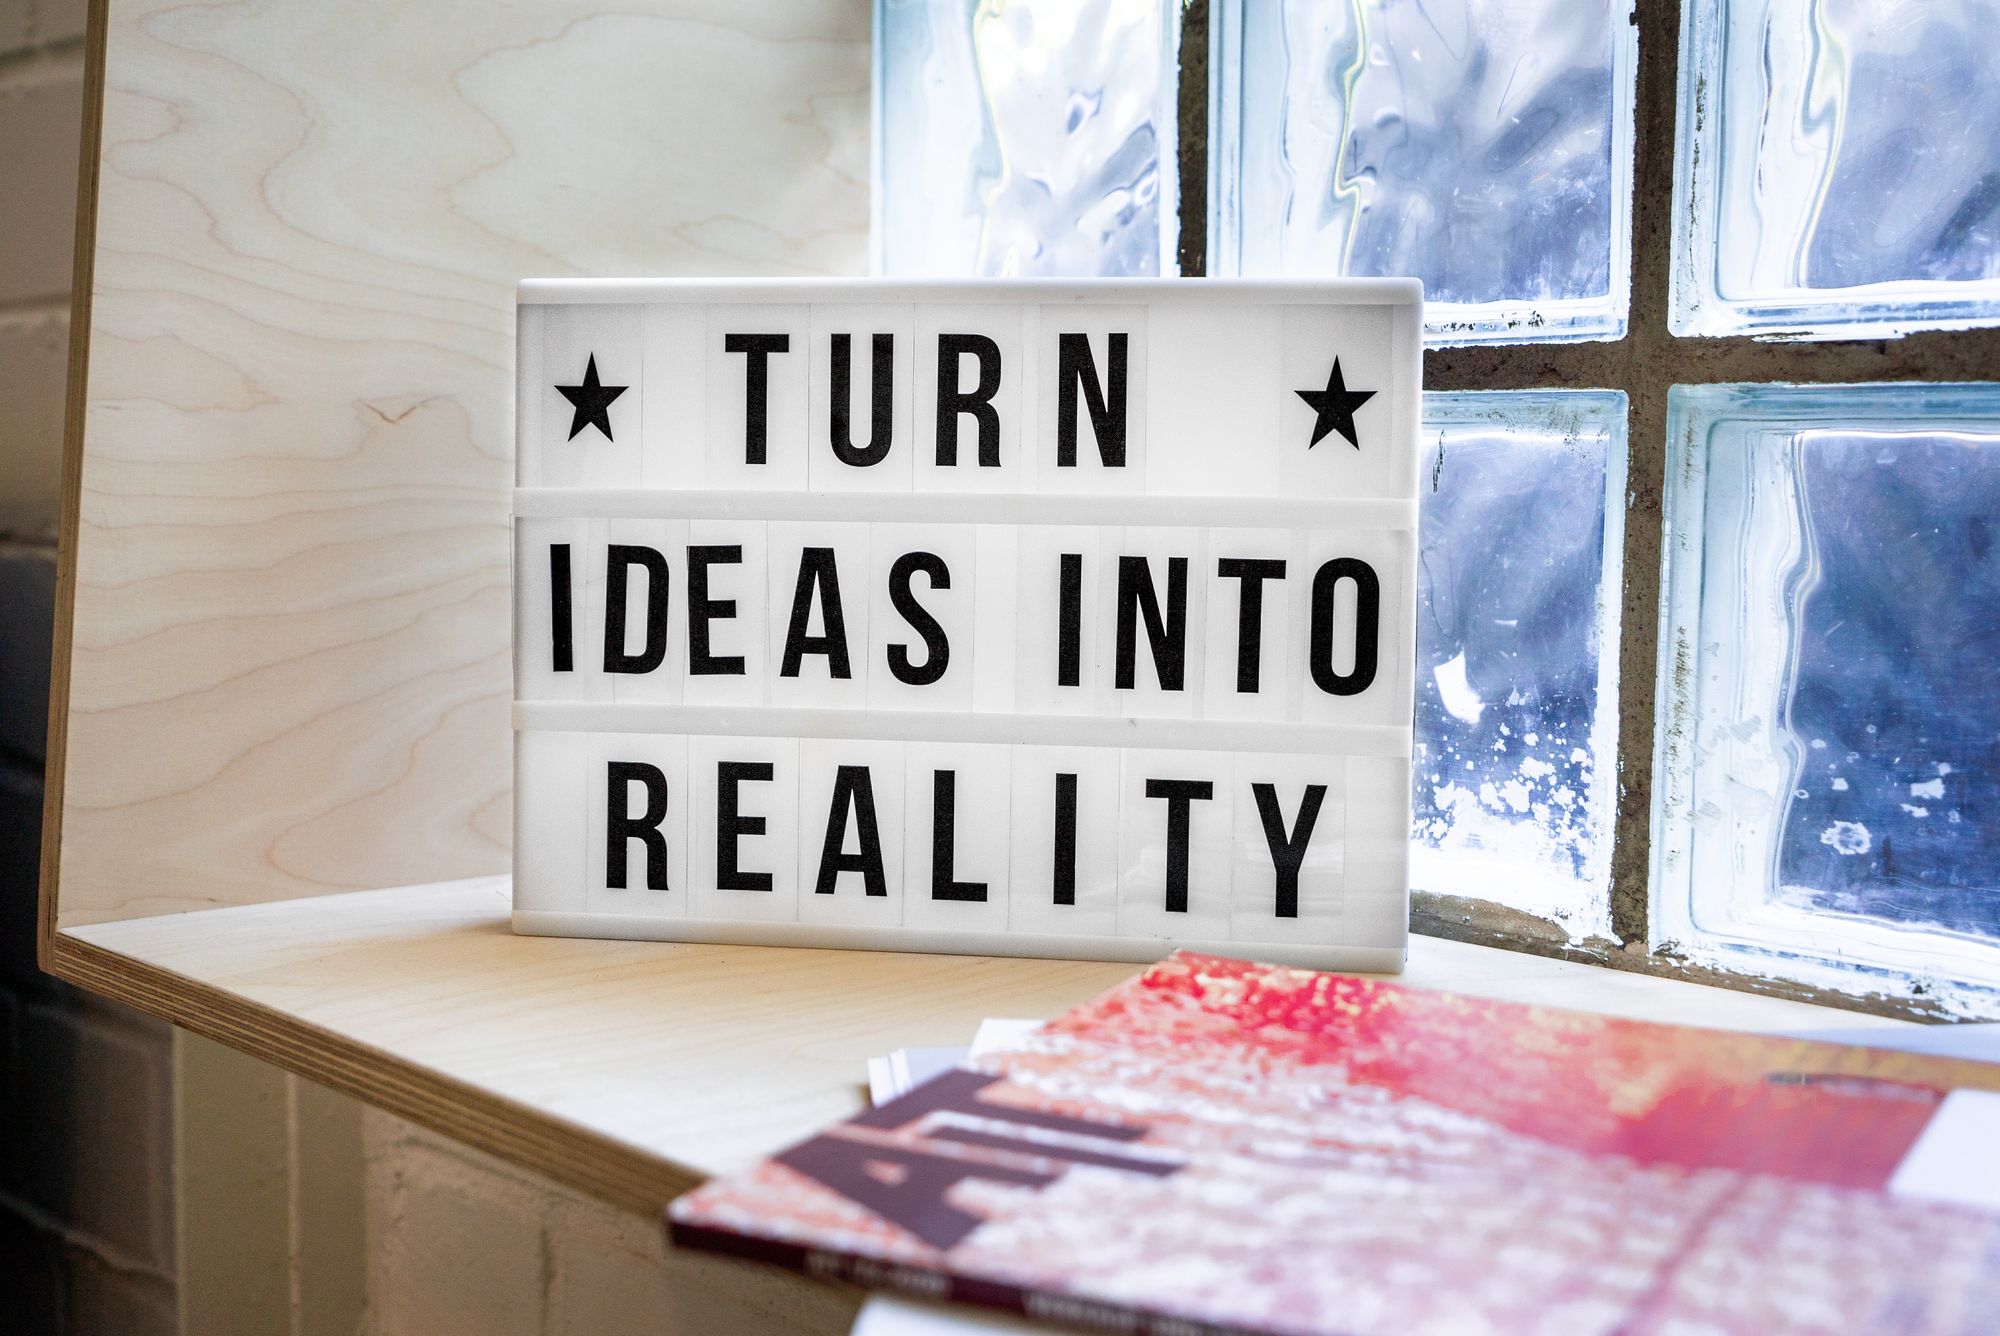 Turn your idea into reality (Photo credit: https://unsplash.com/photos/Y_LgXwQEx2c)